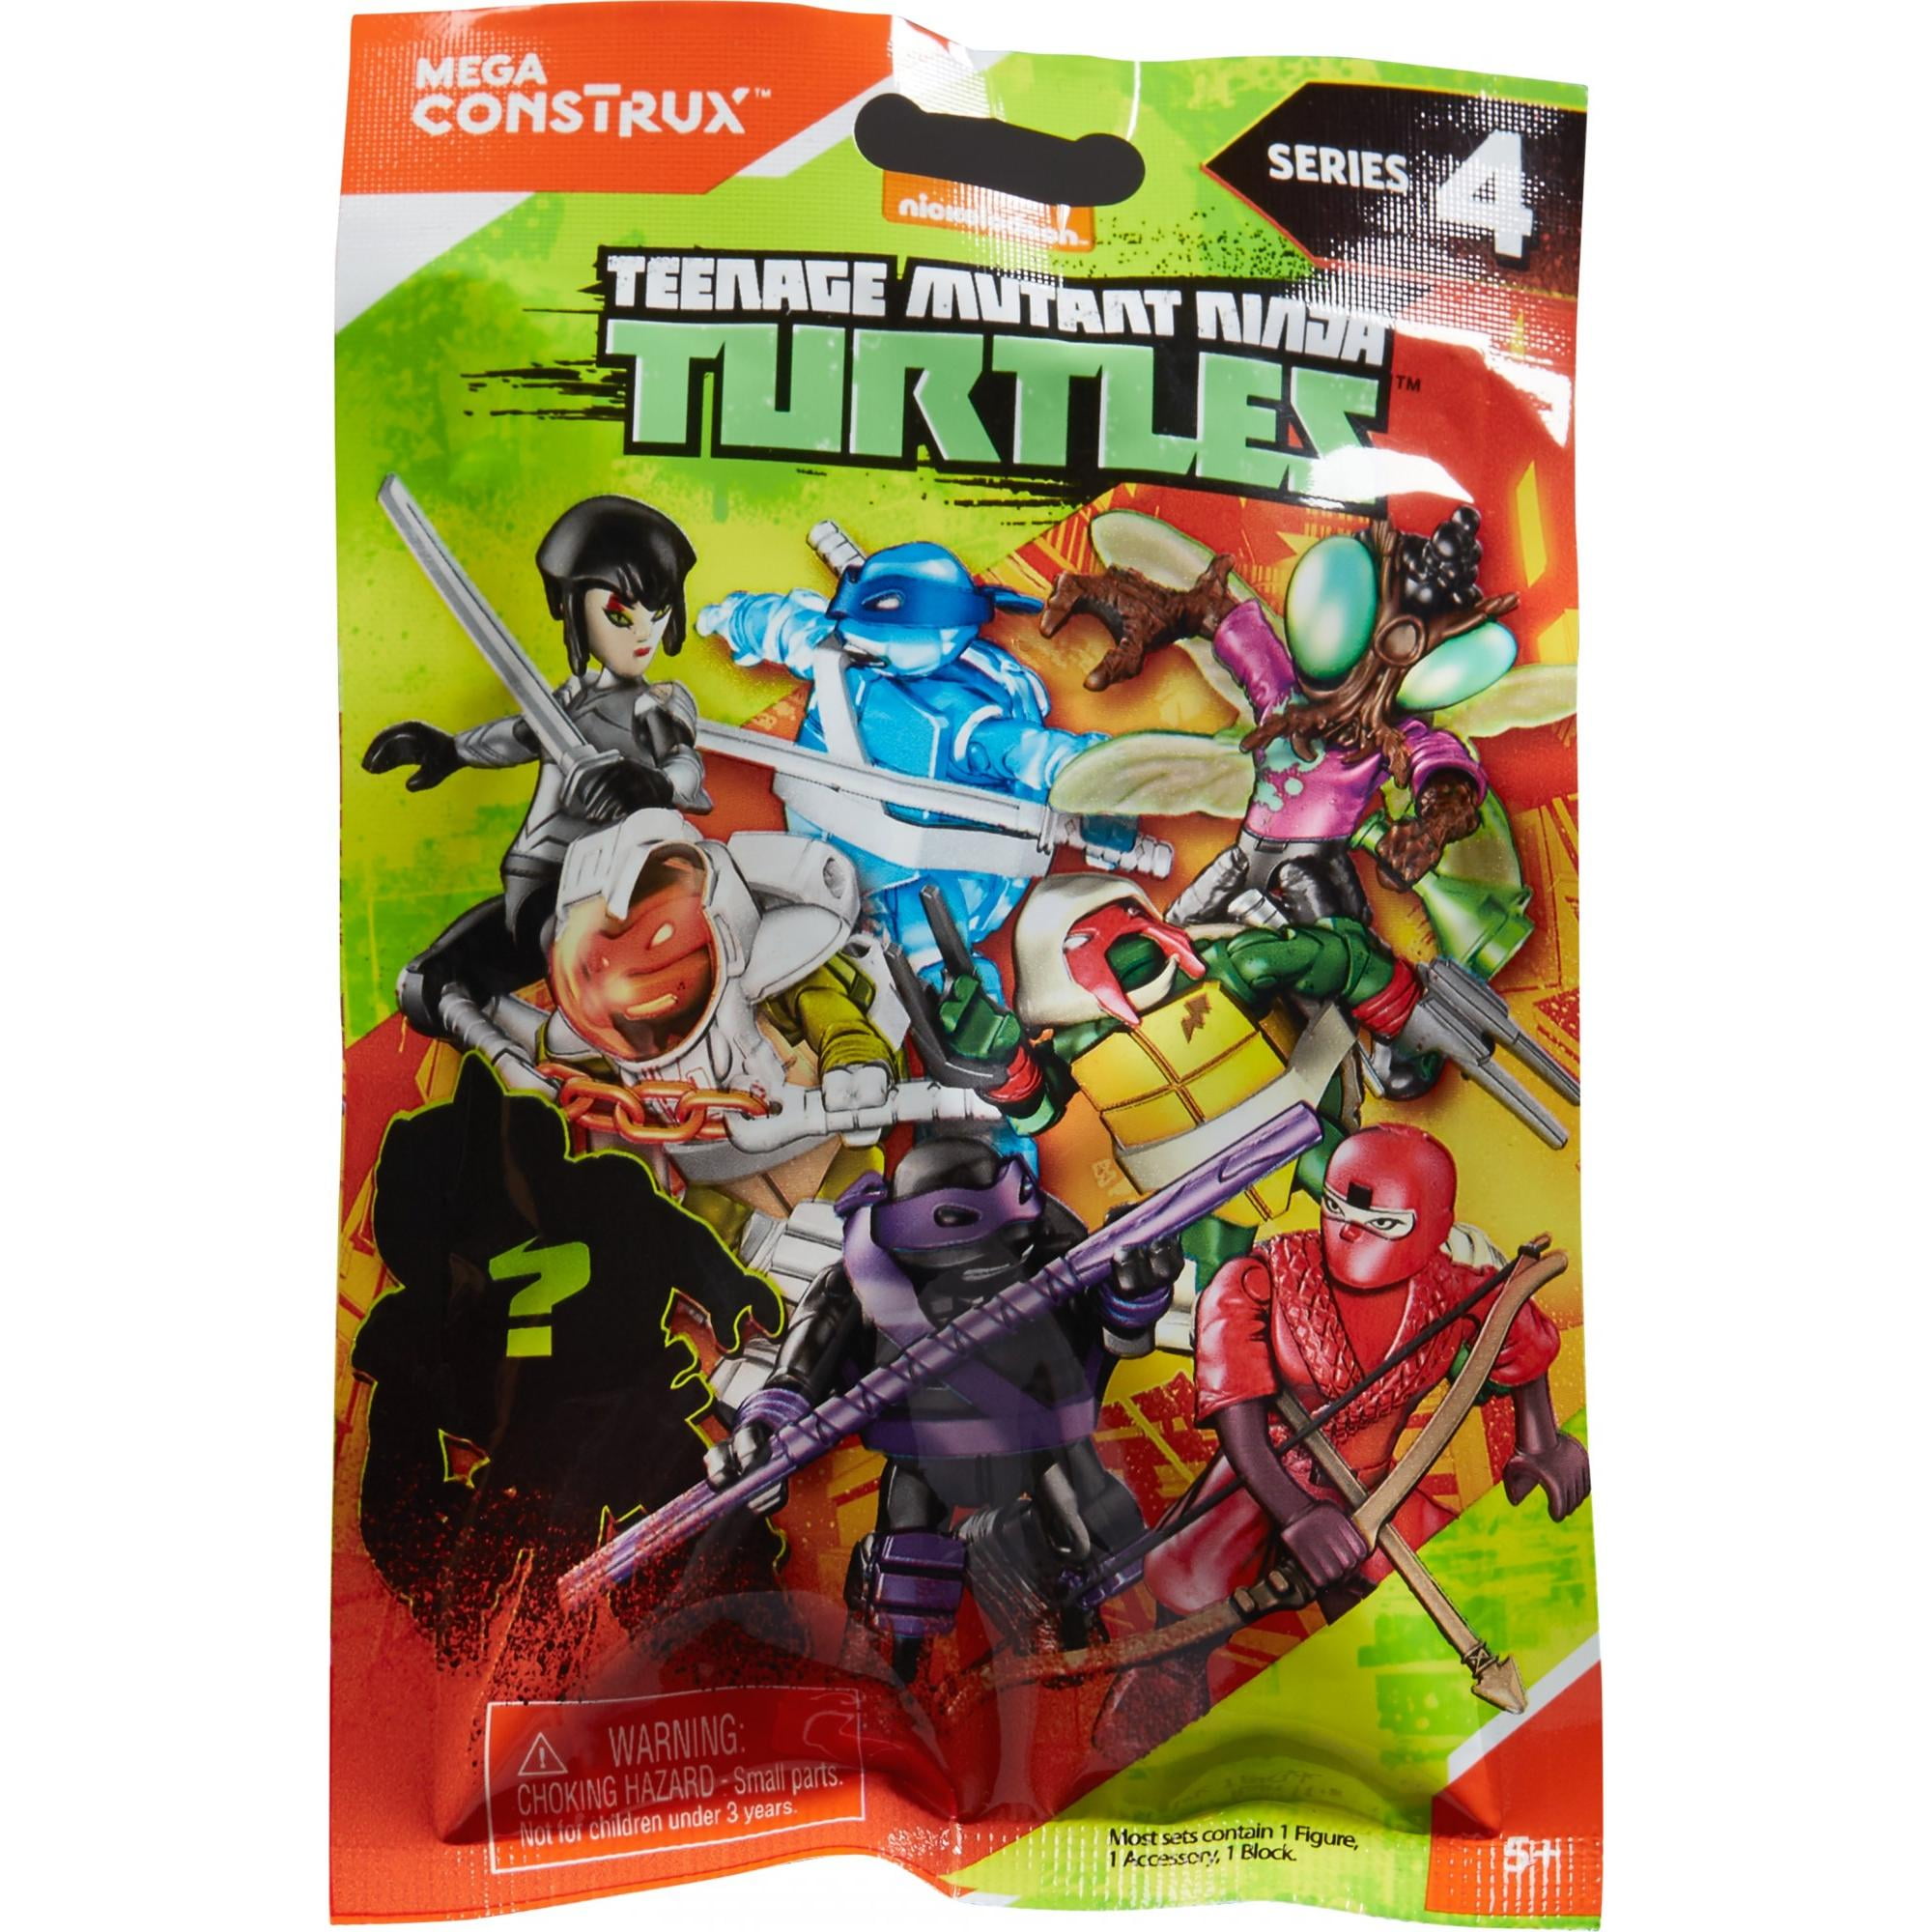 Teenage Mutant Ninja Turtles Mini Figures Mystery Blind Party Bag Pack of 10 